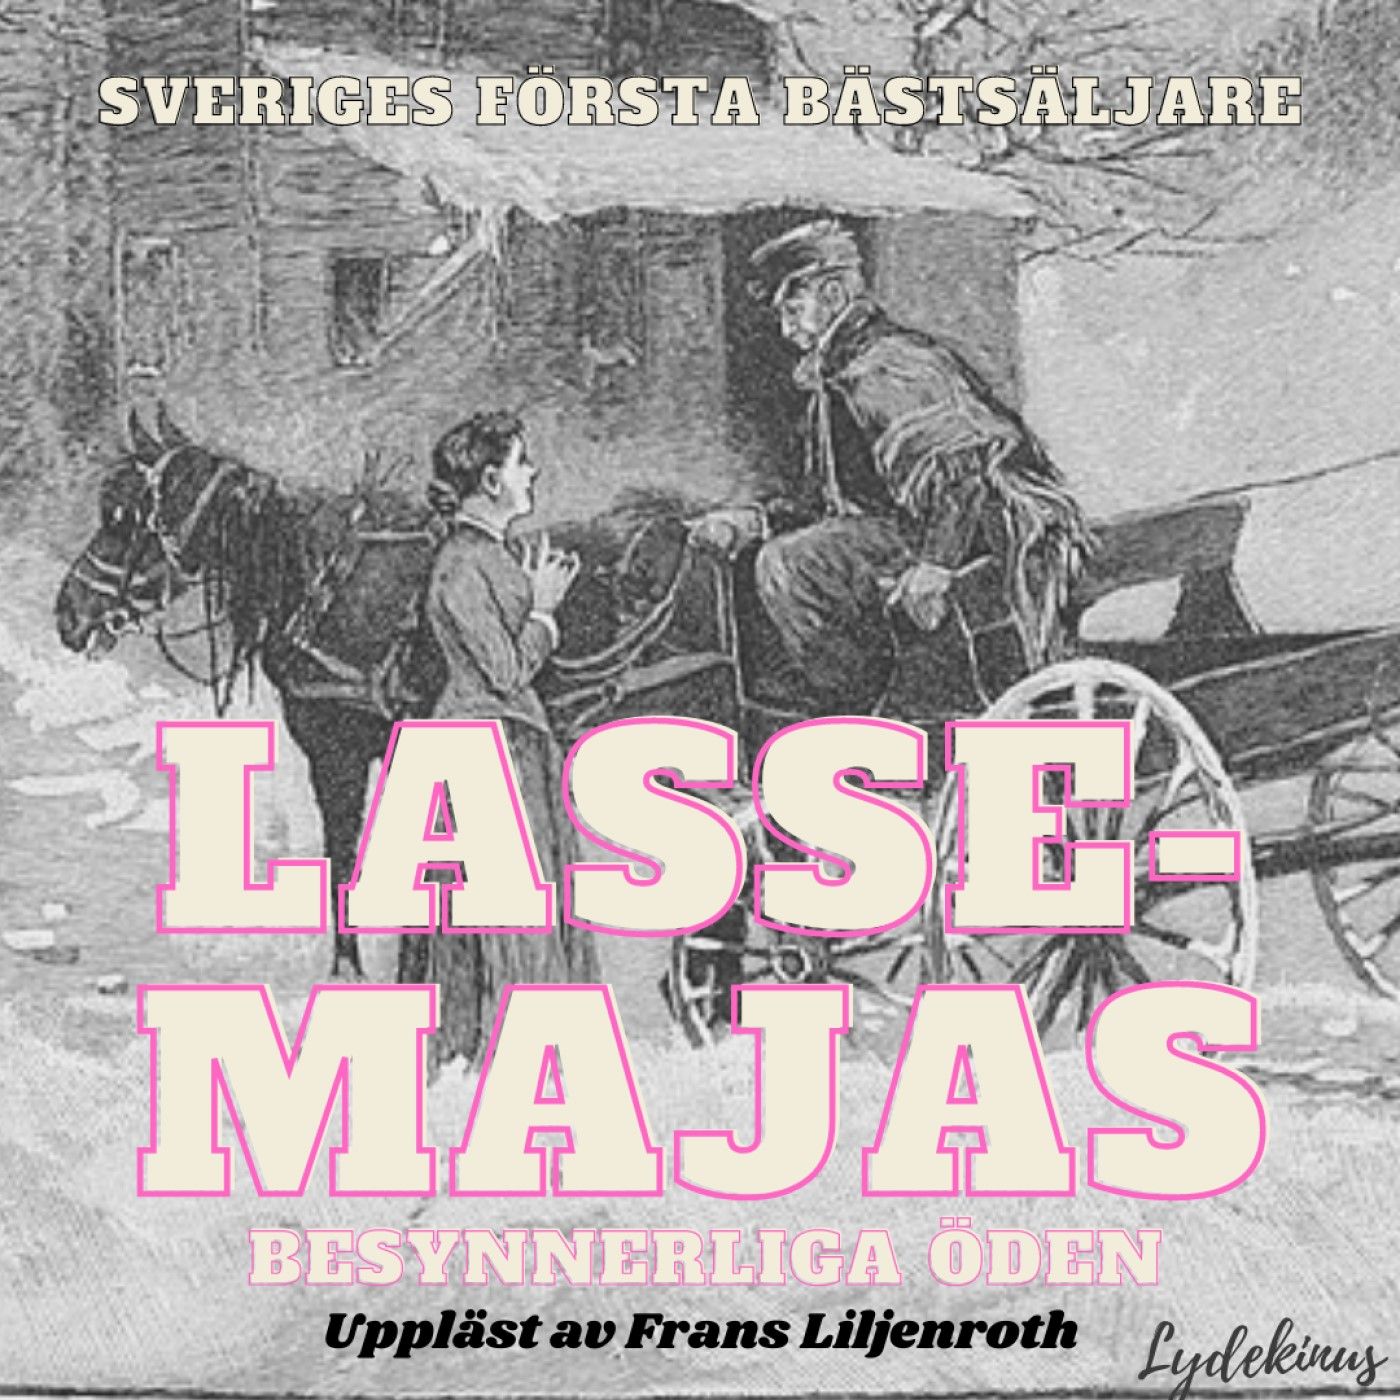 Lasse-Majas besynnerliga öden, audiobook by Lasse-Maja, Lars Molin